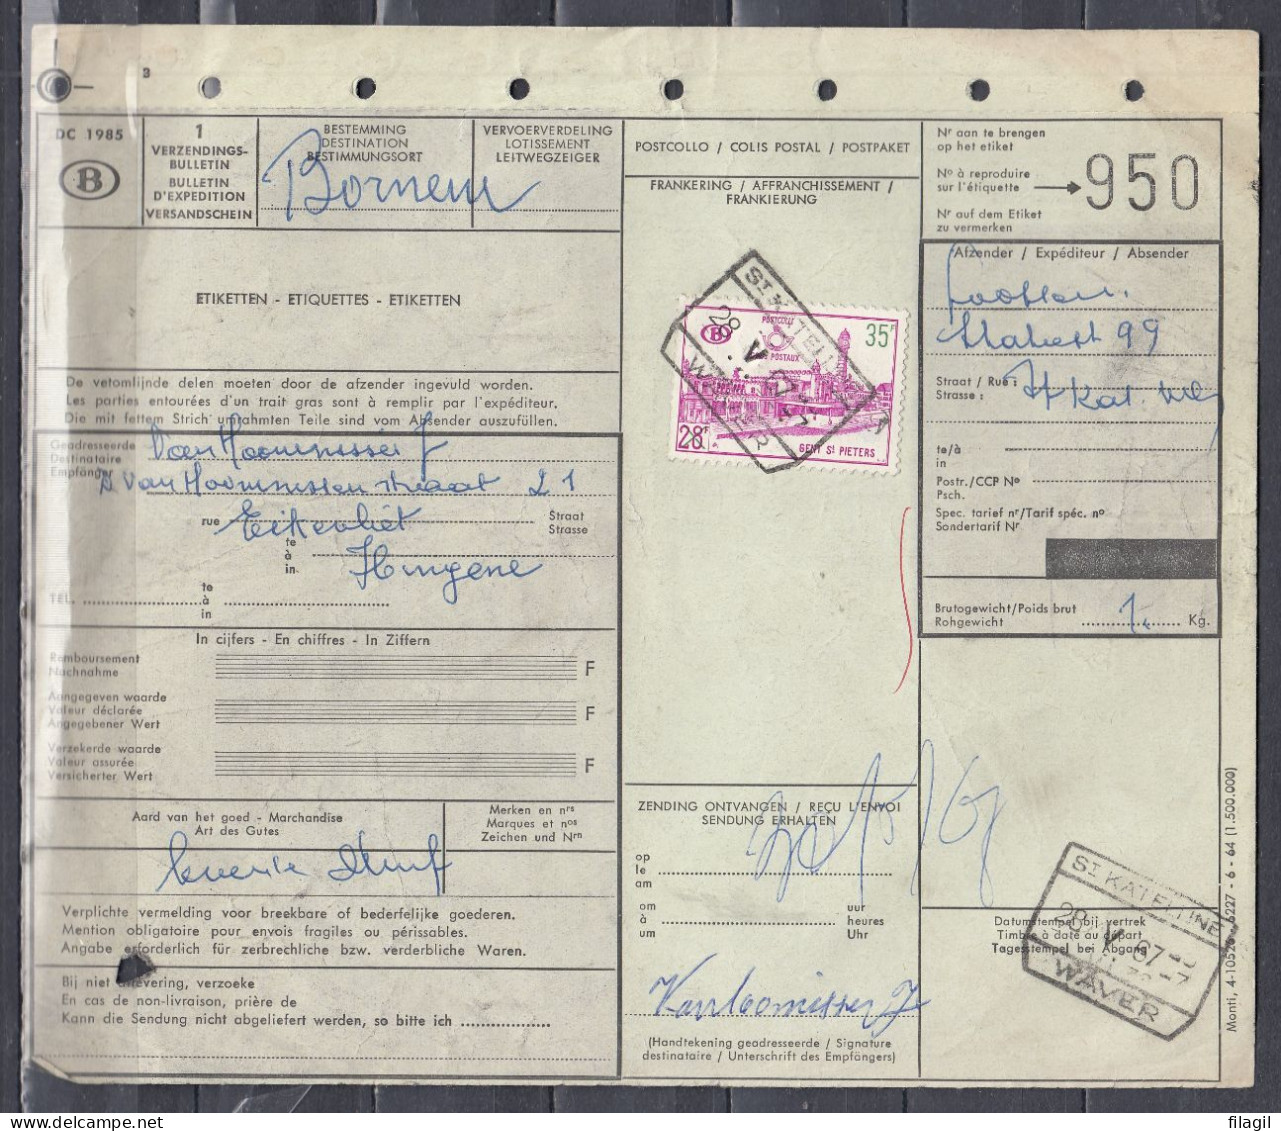 Vrachtbrief Met Stempel St Katelijne Waver - Documents & Fragments